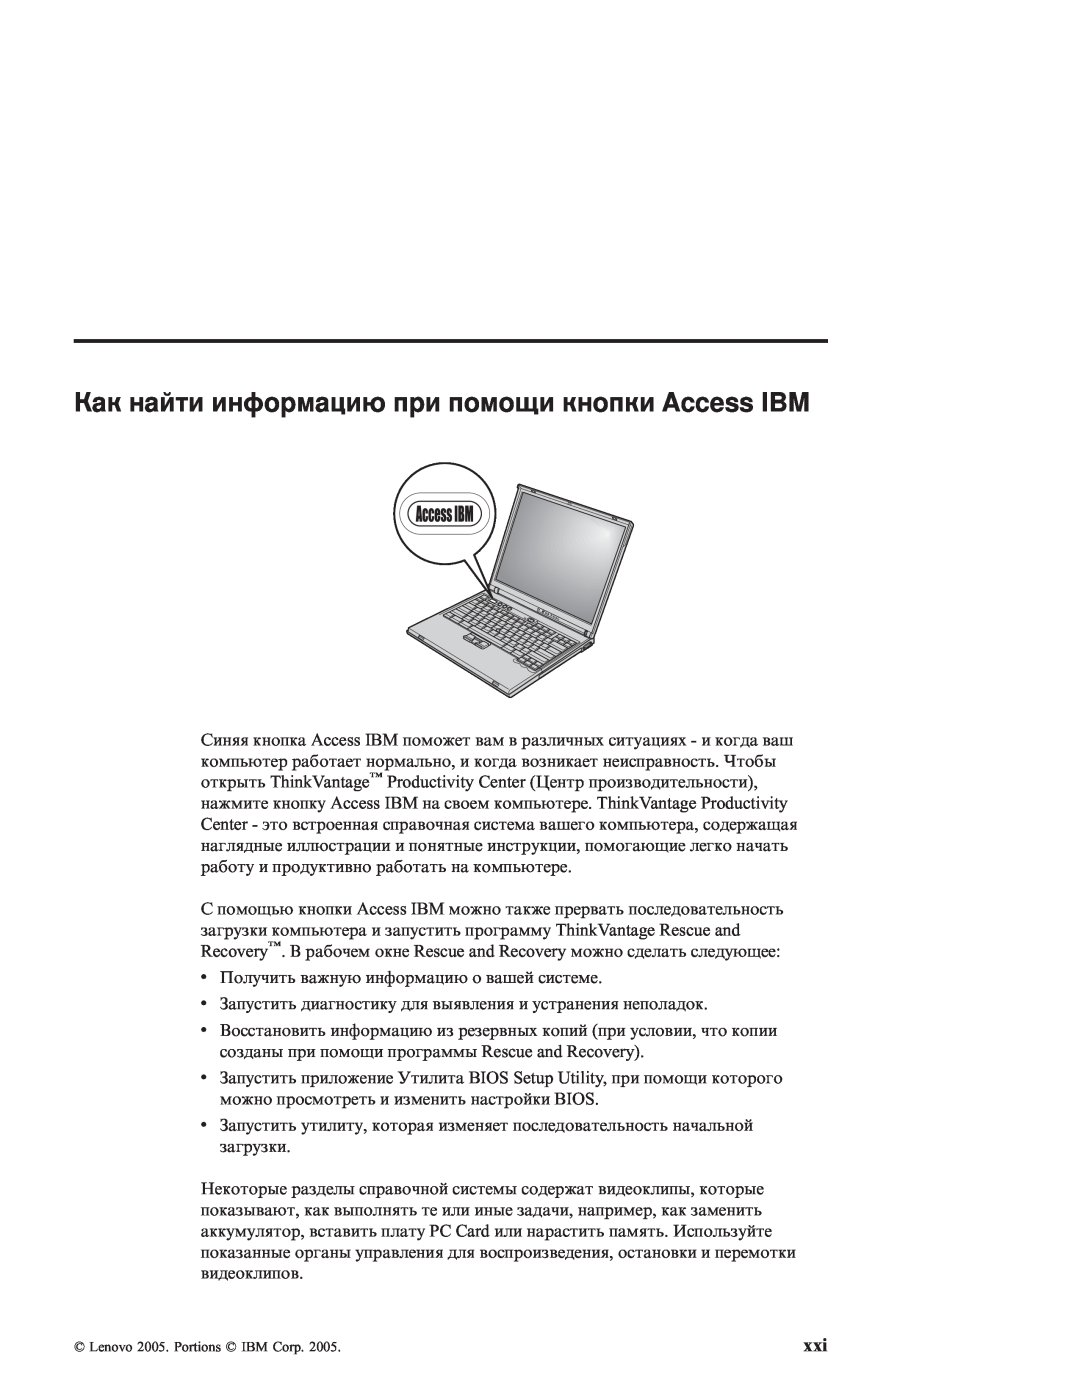 IBM R51E manual Как найти информацию при помощи кнопки Access IBM 